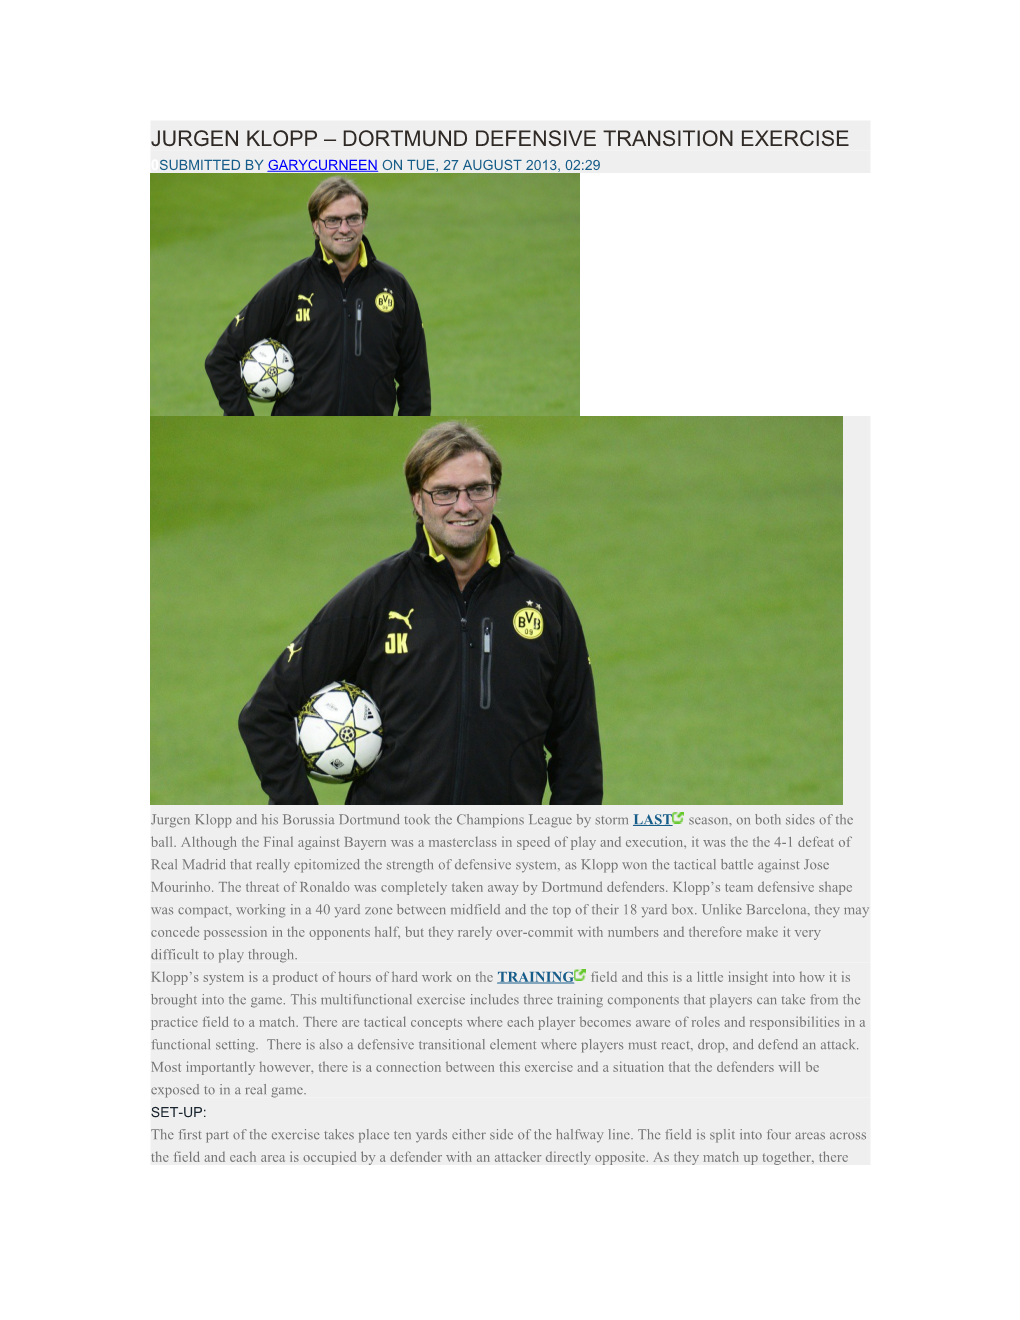 Jurgen Klopp Dortmund Defensive Transition Exercise